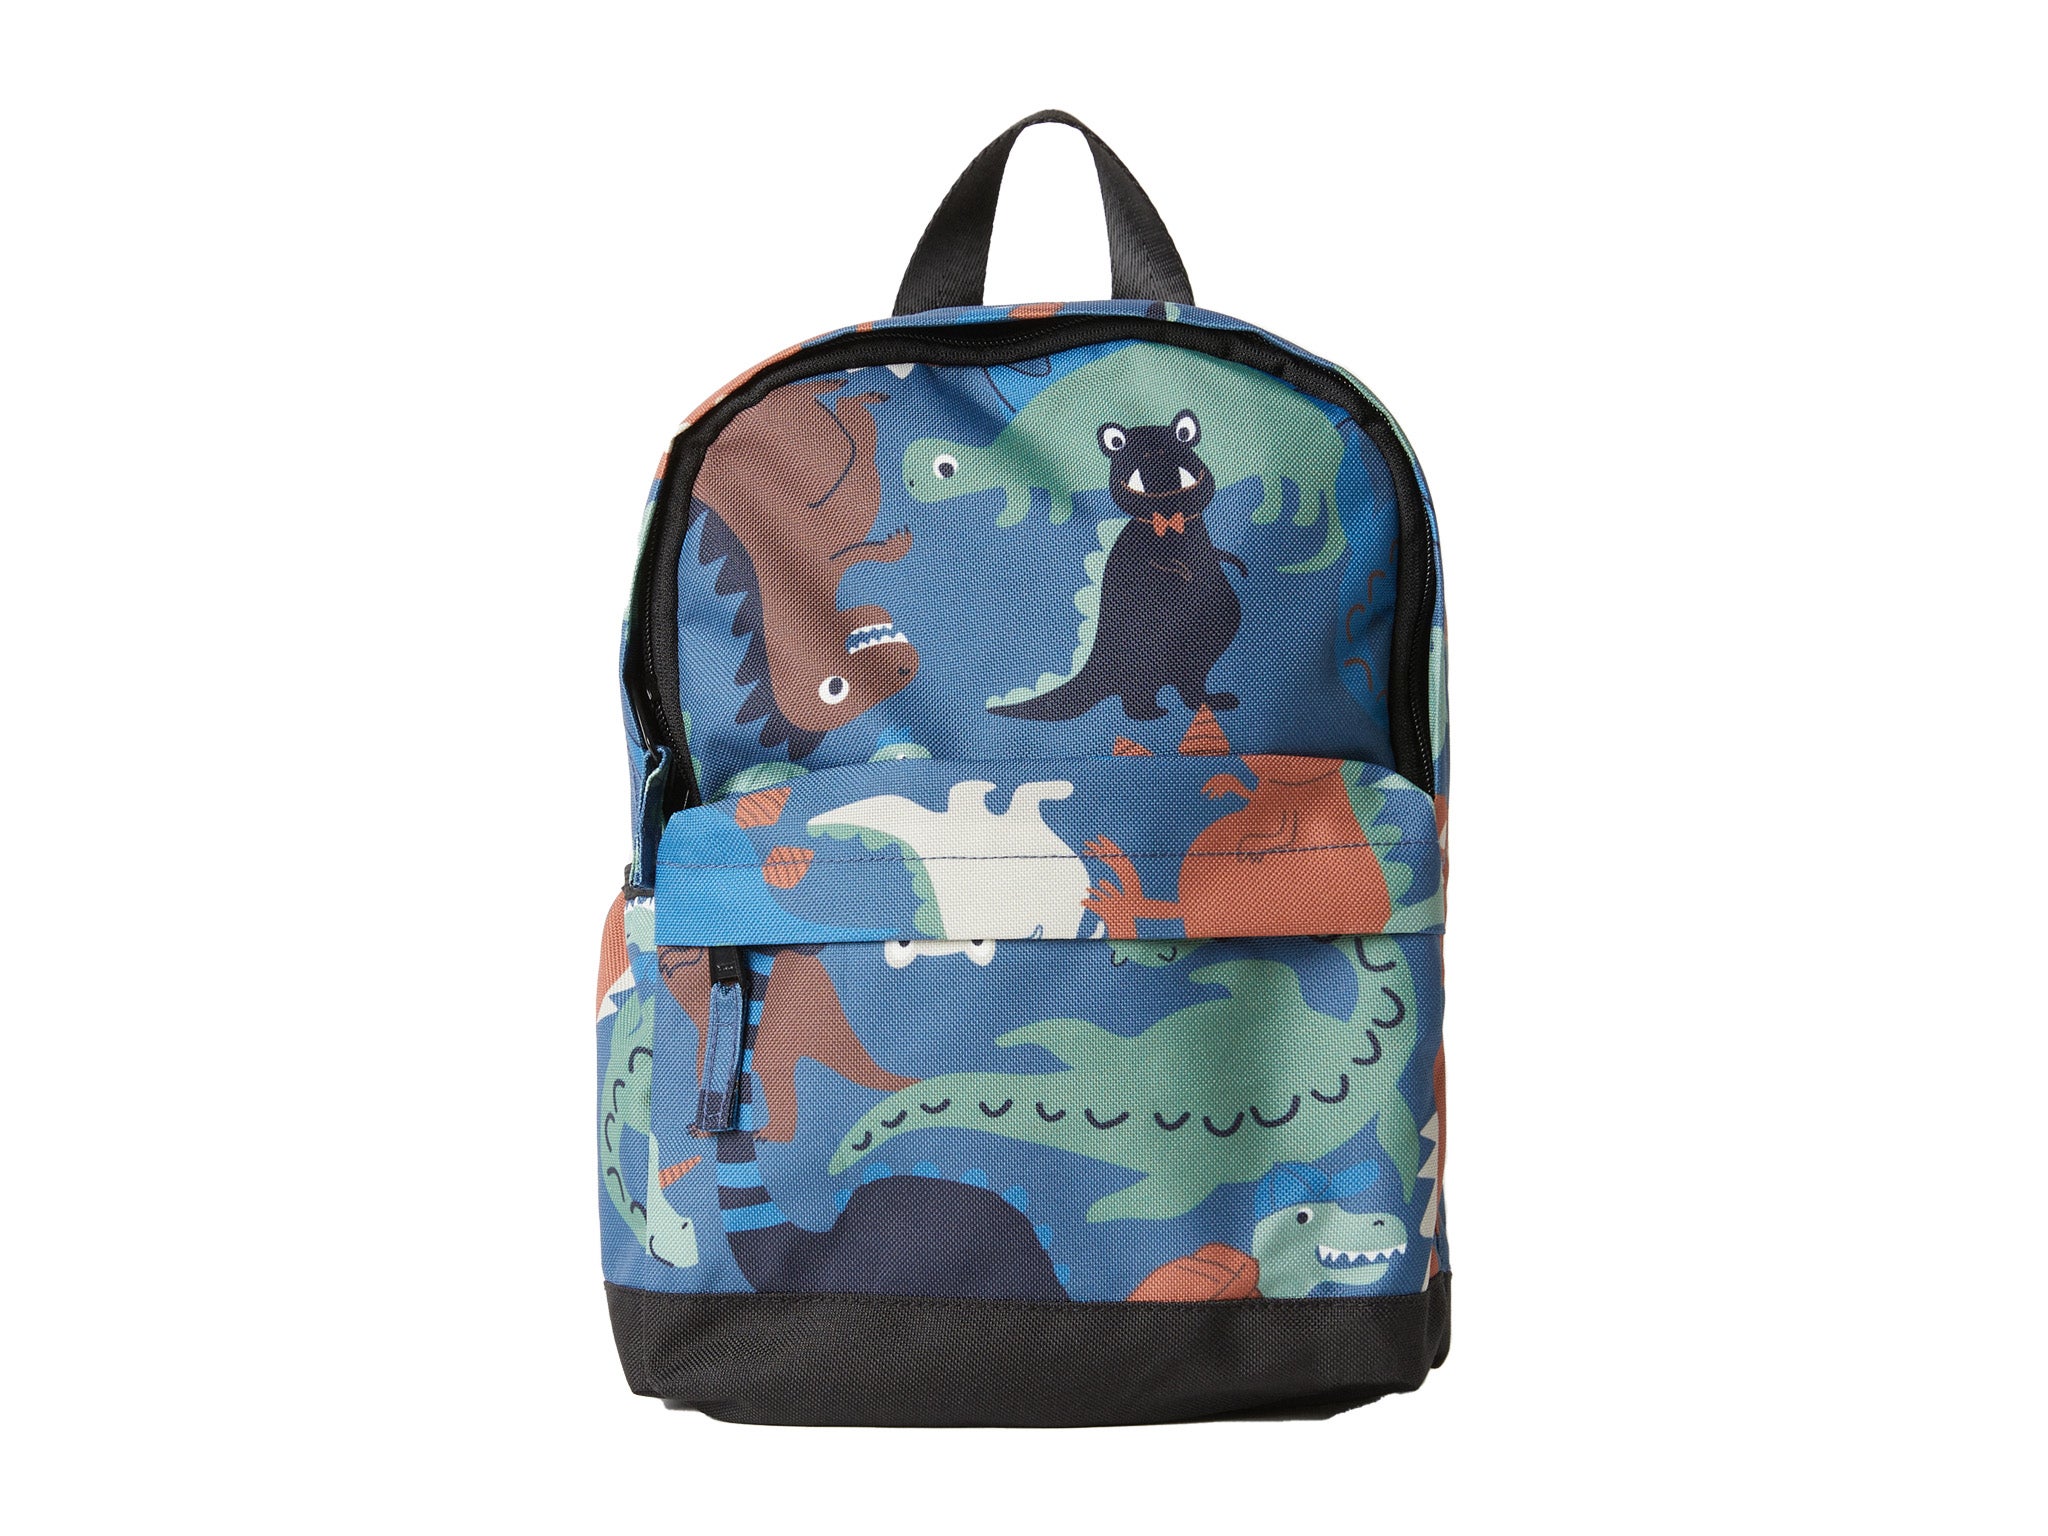  Polarn O. Pyret  dinosaur kids’ backpack  .jpg